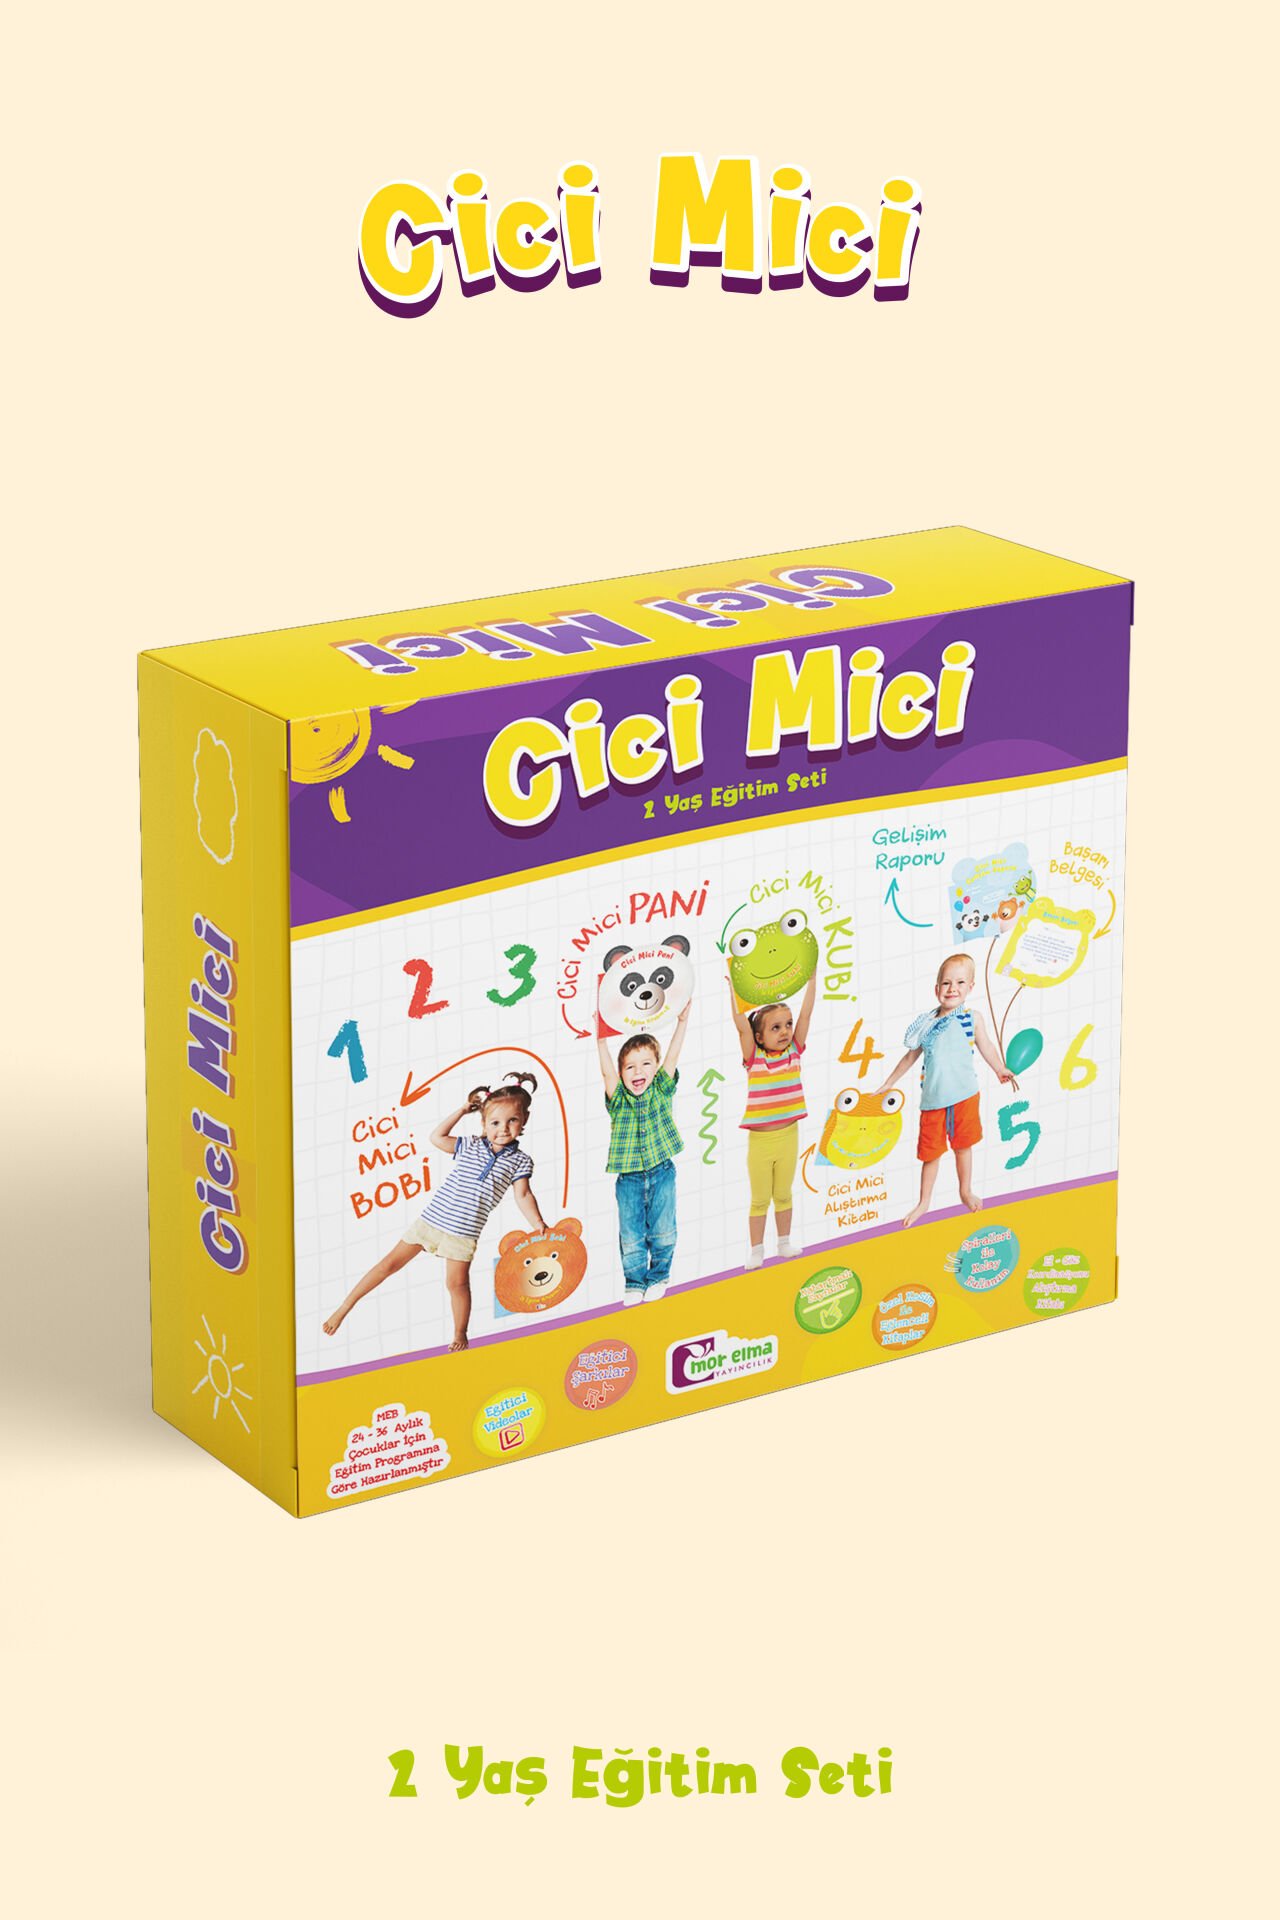 Cici Mici 2-3 Years Preschool Education Set